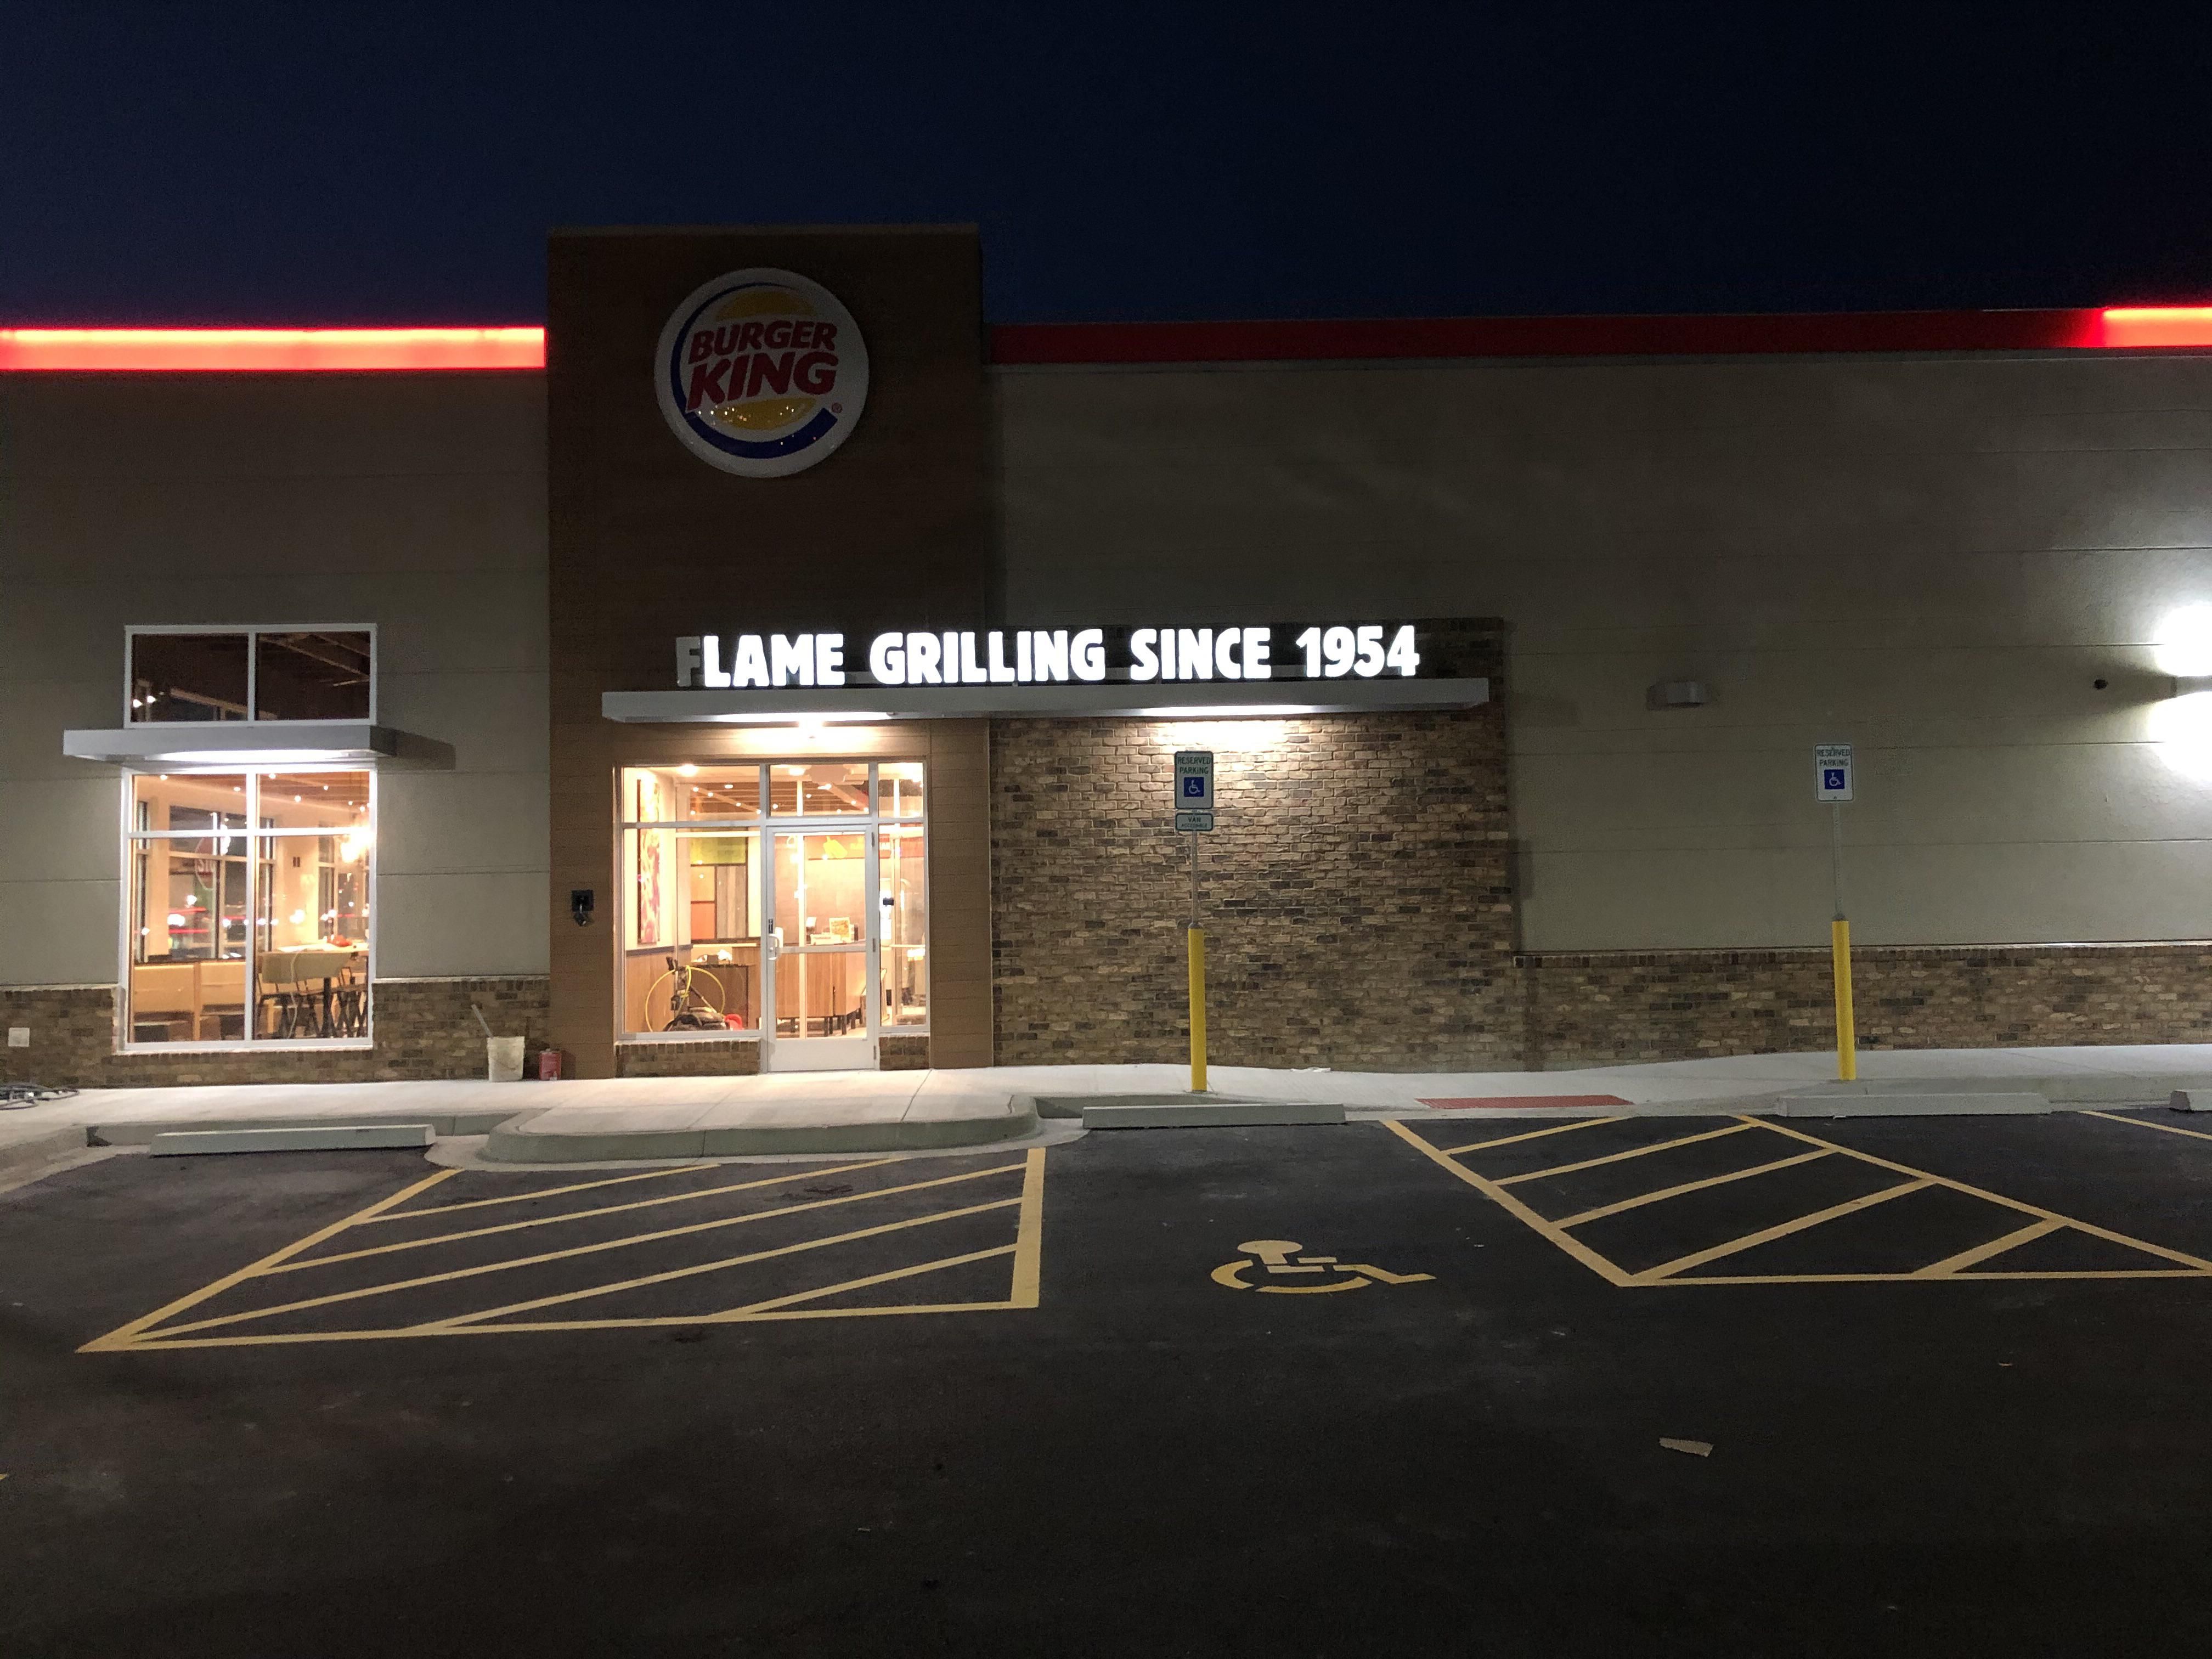 New Burger King tells it as it is